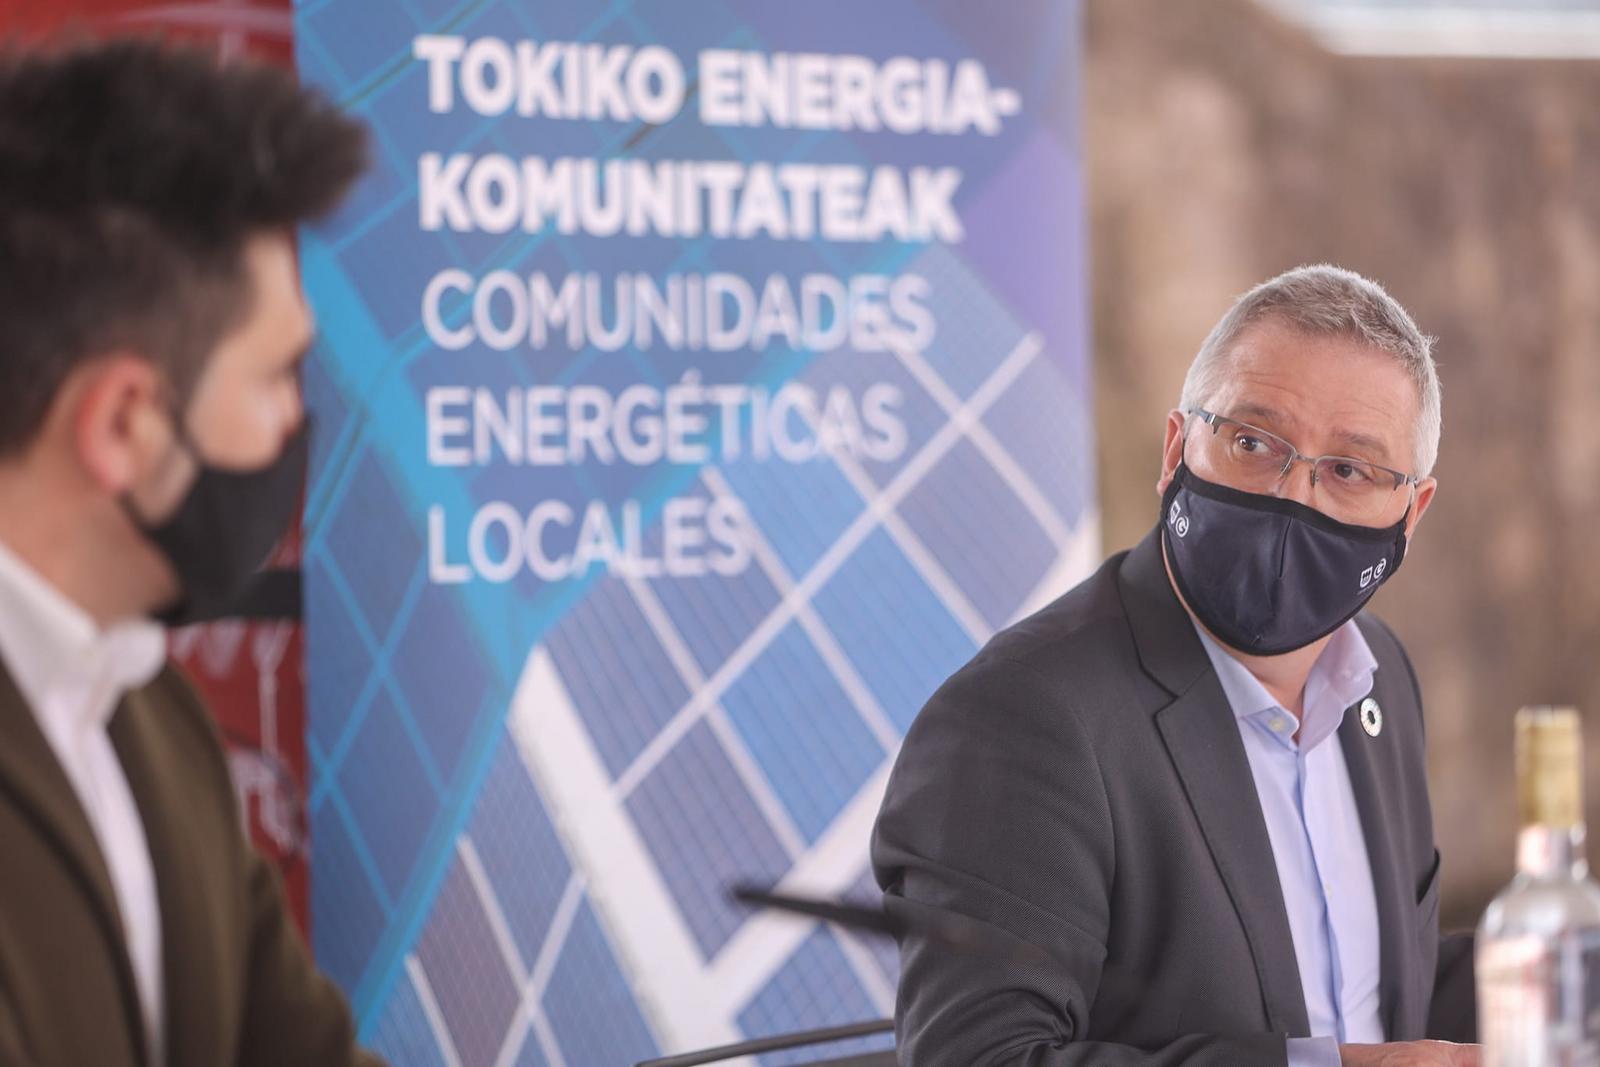 200 hogares de Zumarraga podrán optar al autoconsumo energético a través de la primera Comunidad energética local.